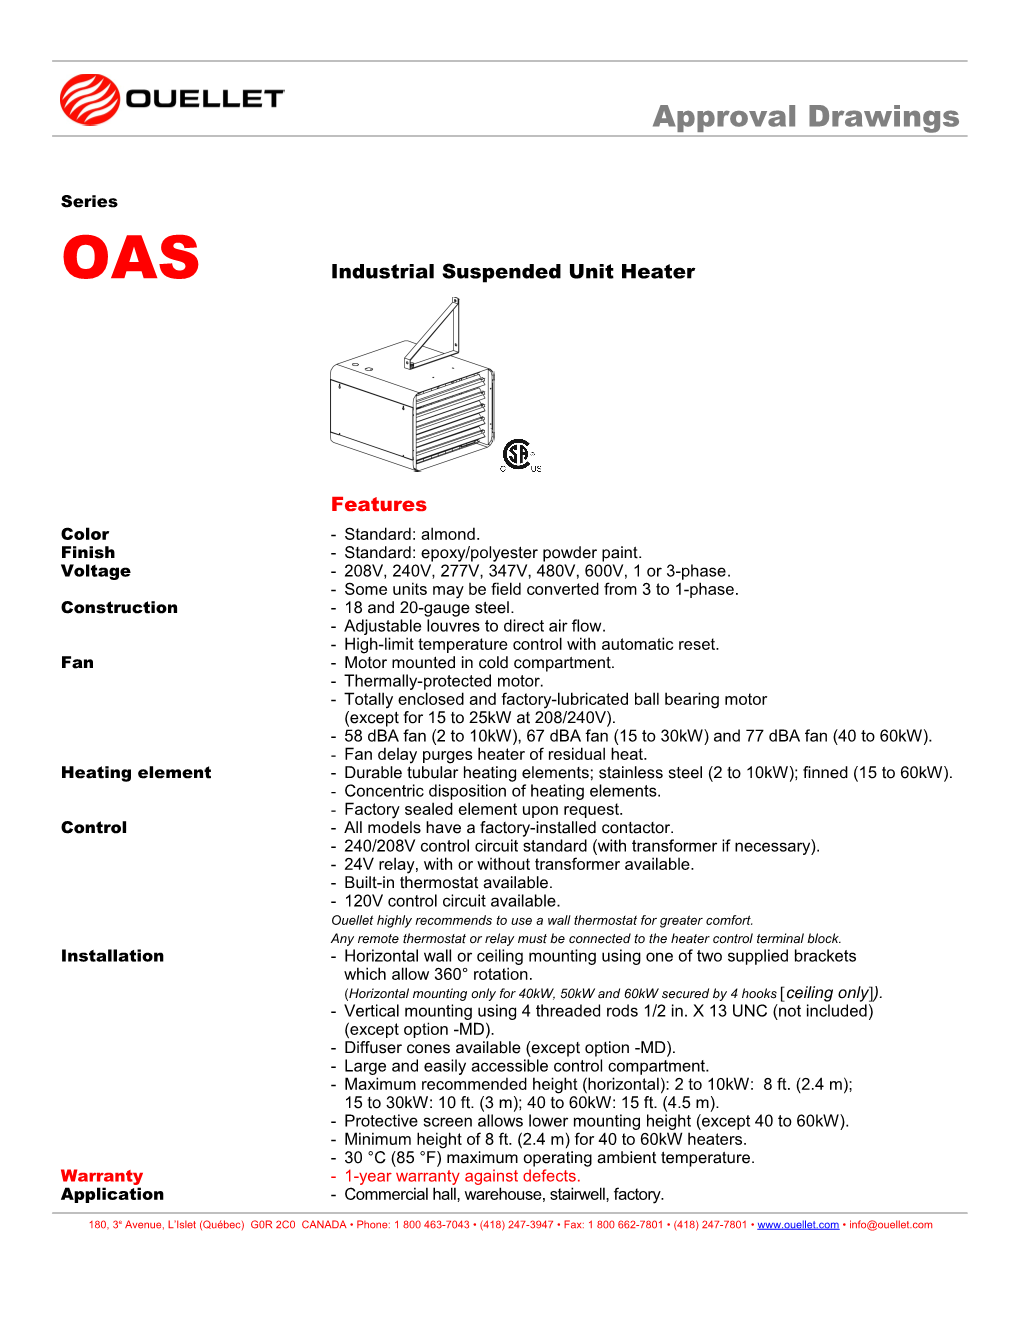 Oasindustrial Suspended Unit Heater